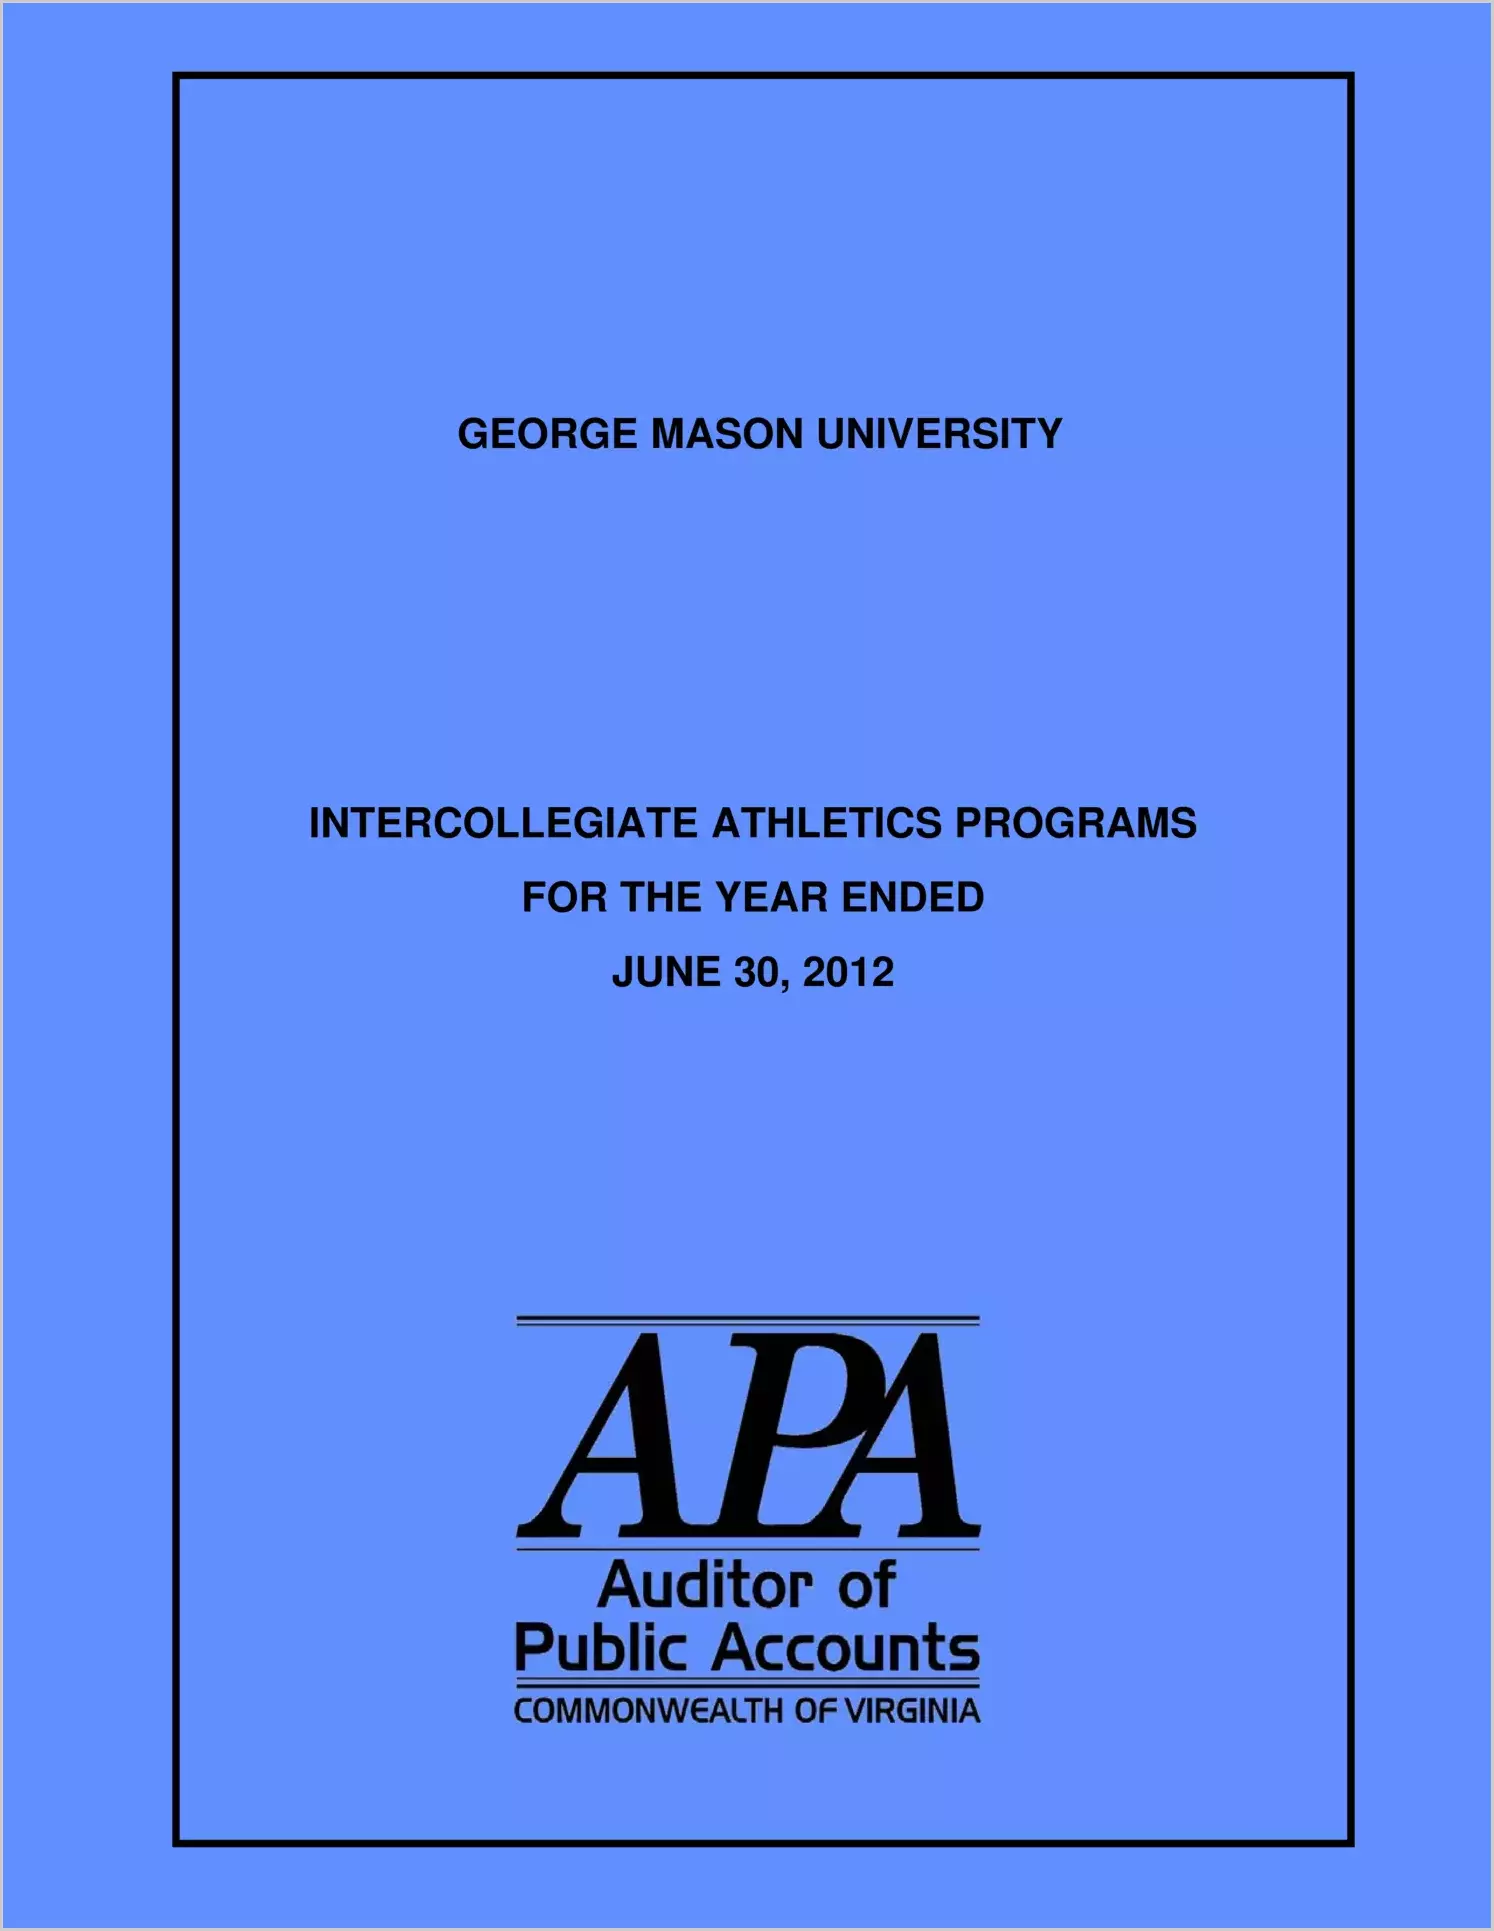 George Mason University Intercollegiate Athletics Programs for the year ended June 30, 2012